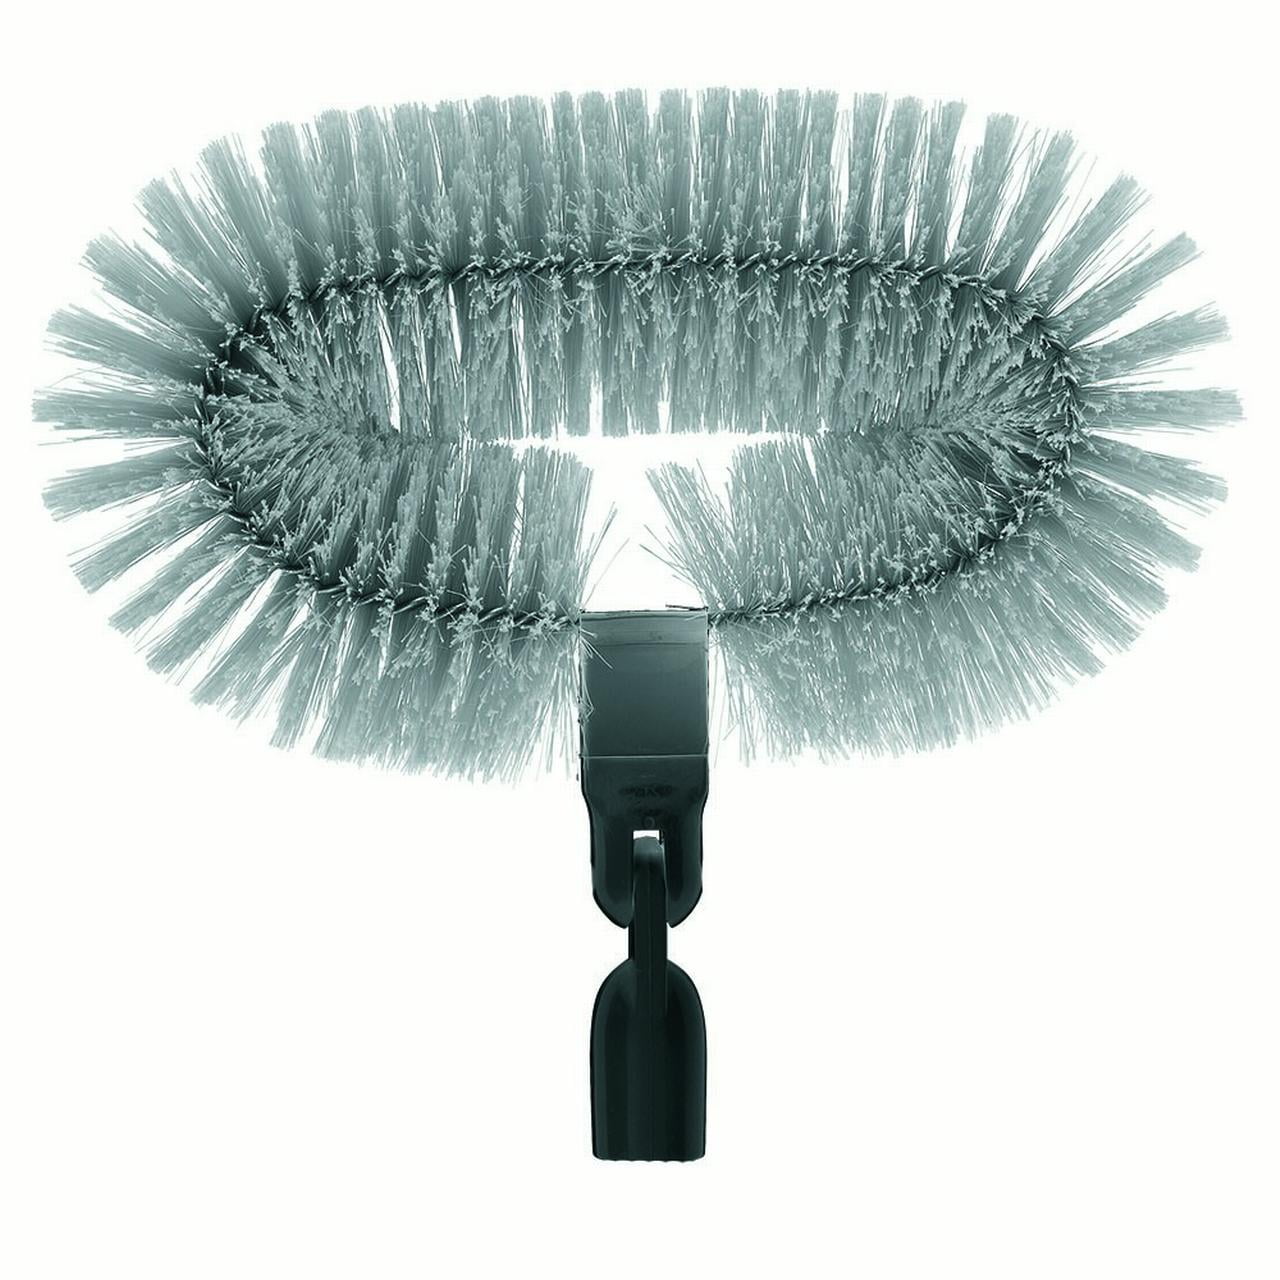 Ceiling Fan Duster Brush (310-101): Dusters & Brushes